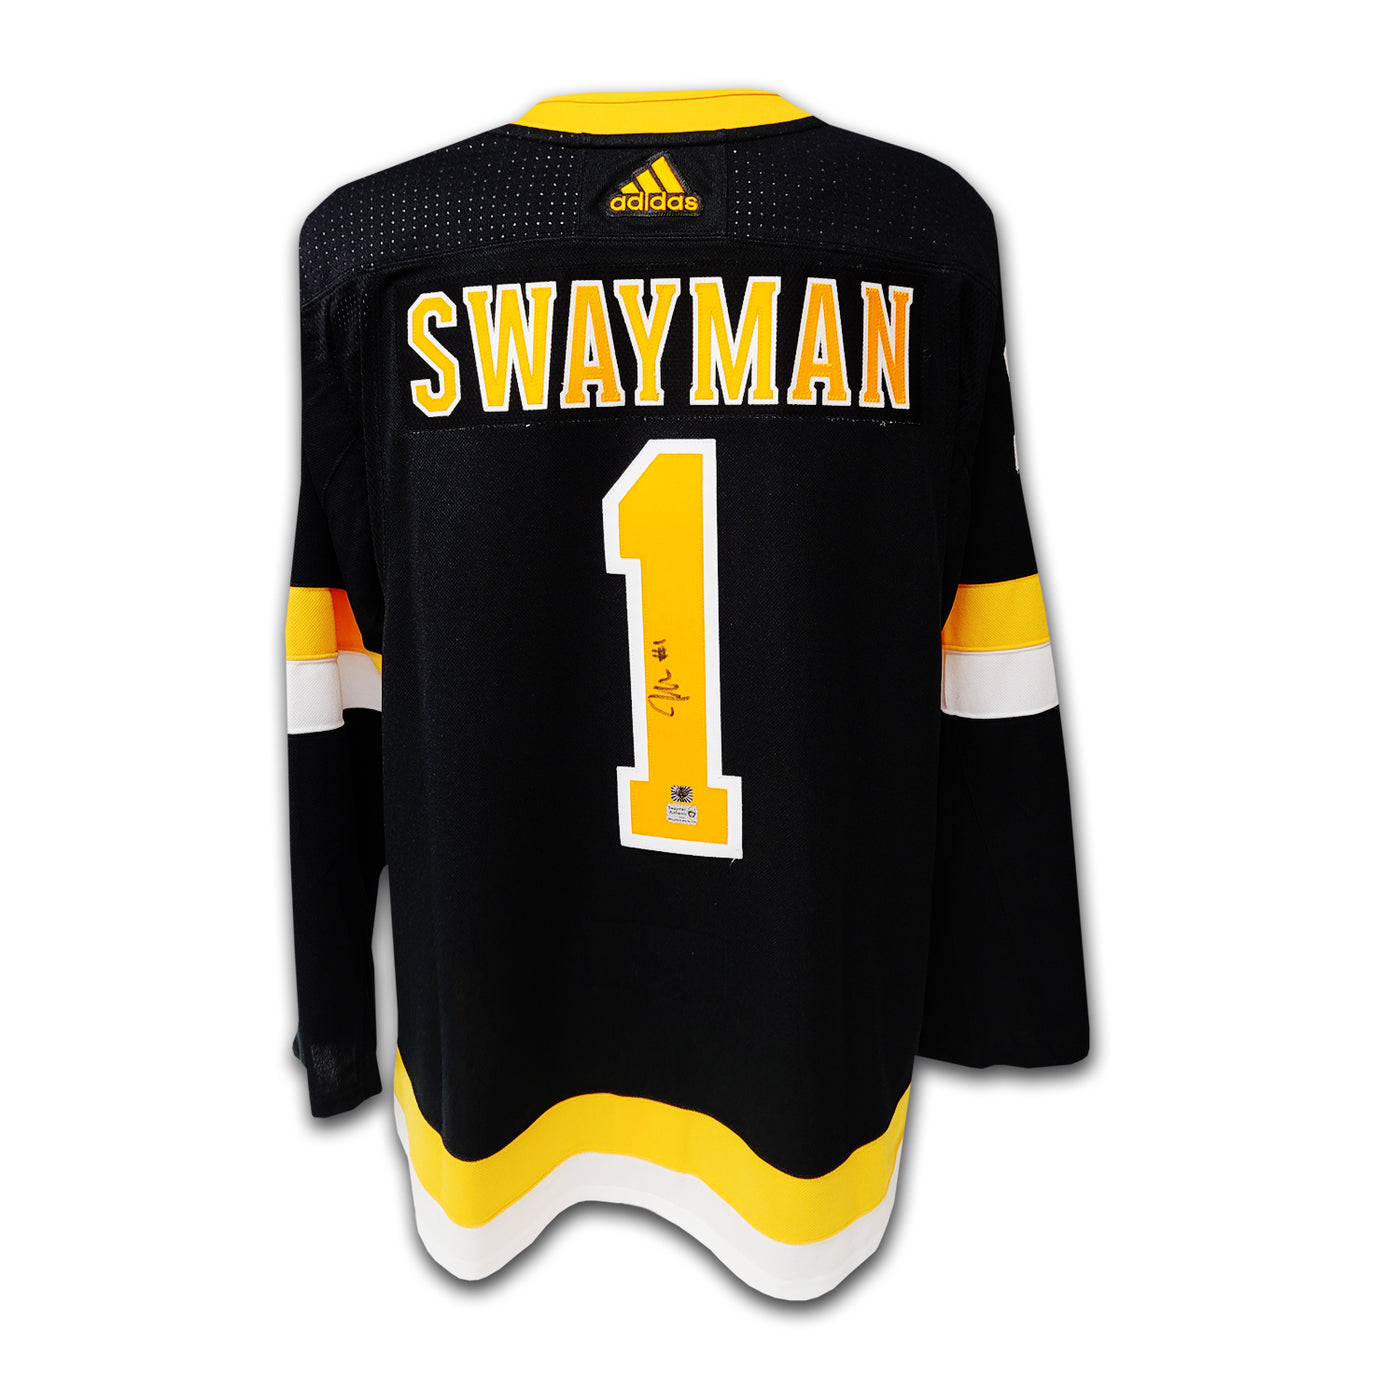 Jeremy Swayman Boston Bruins Third Adidas Jersey